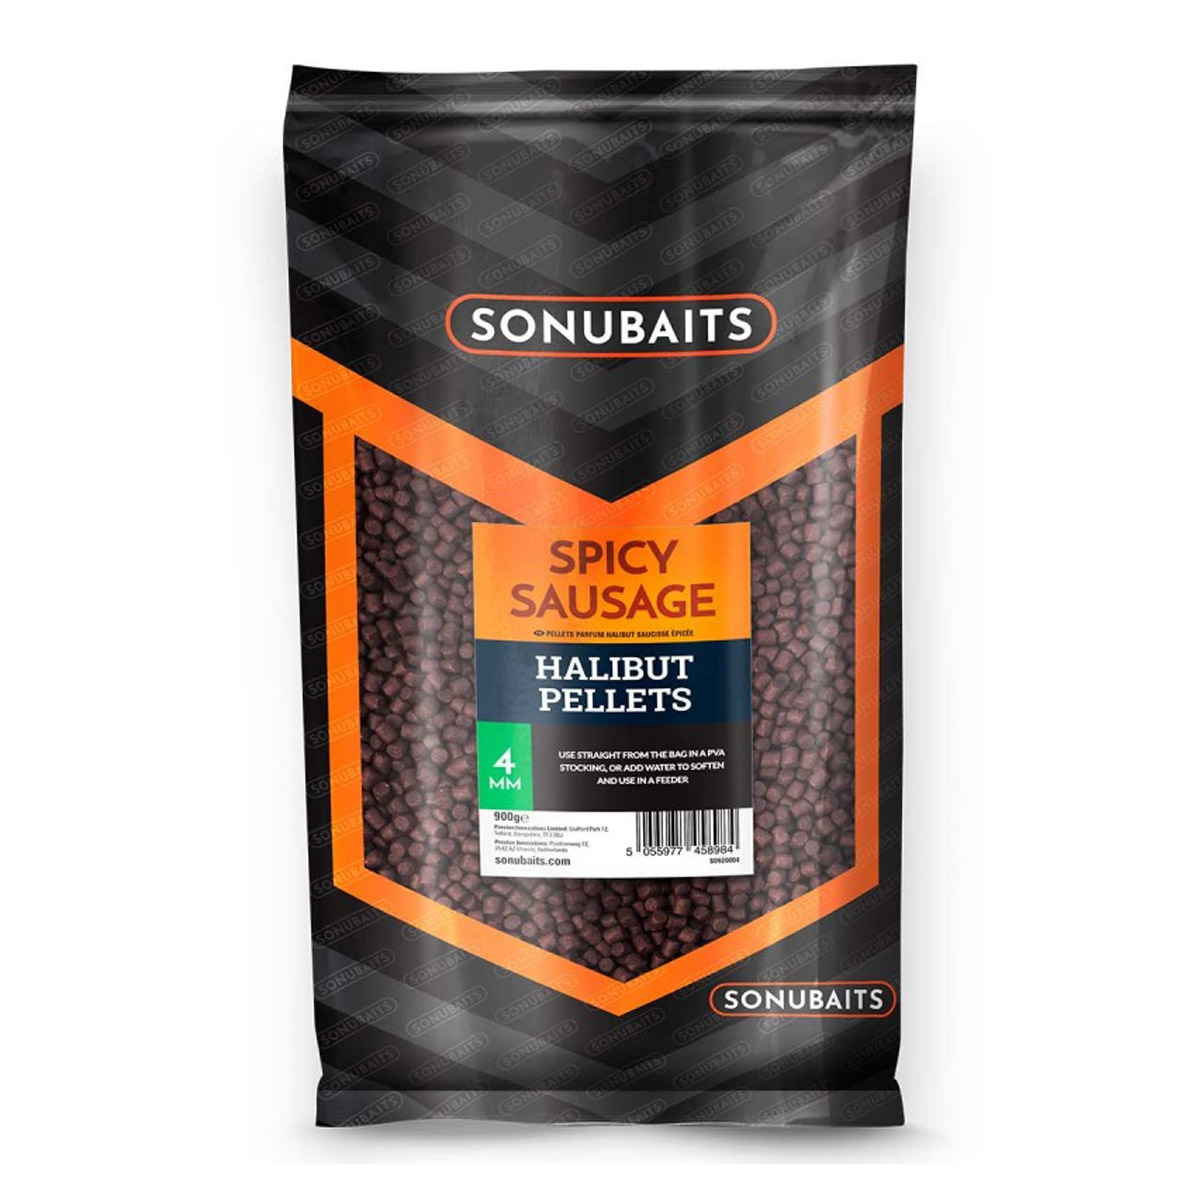 Sonubaits Spicy Sausage Halibut Pellets -  4 mm